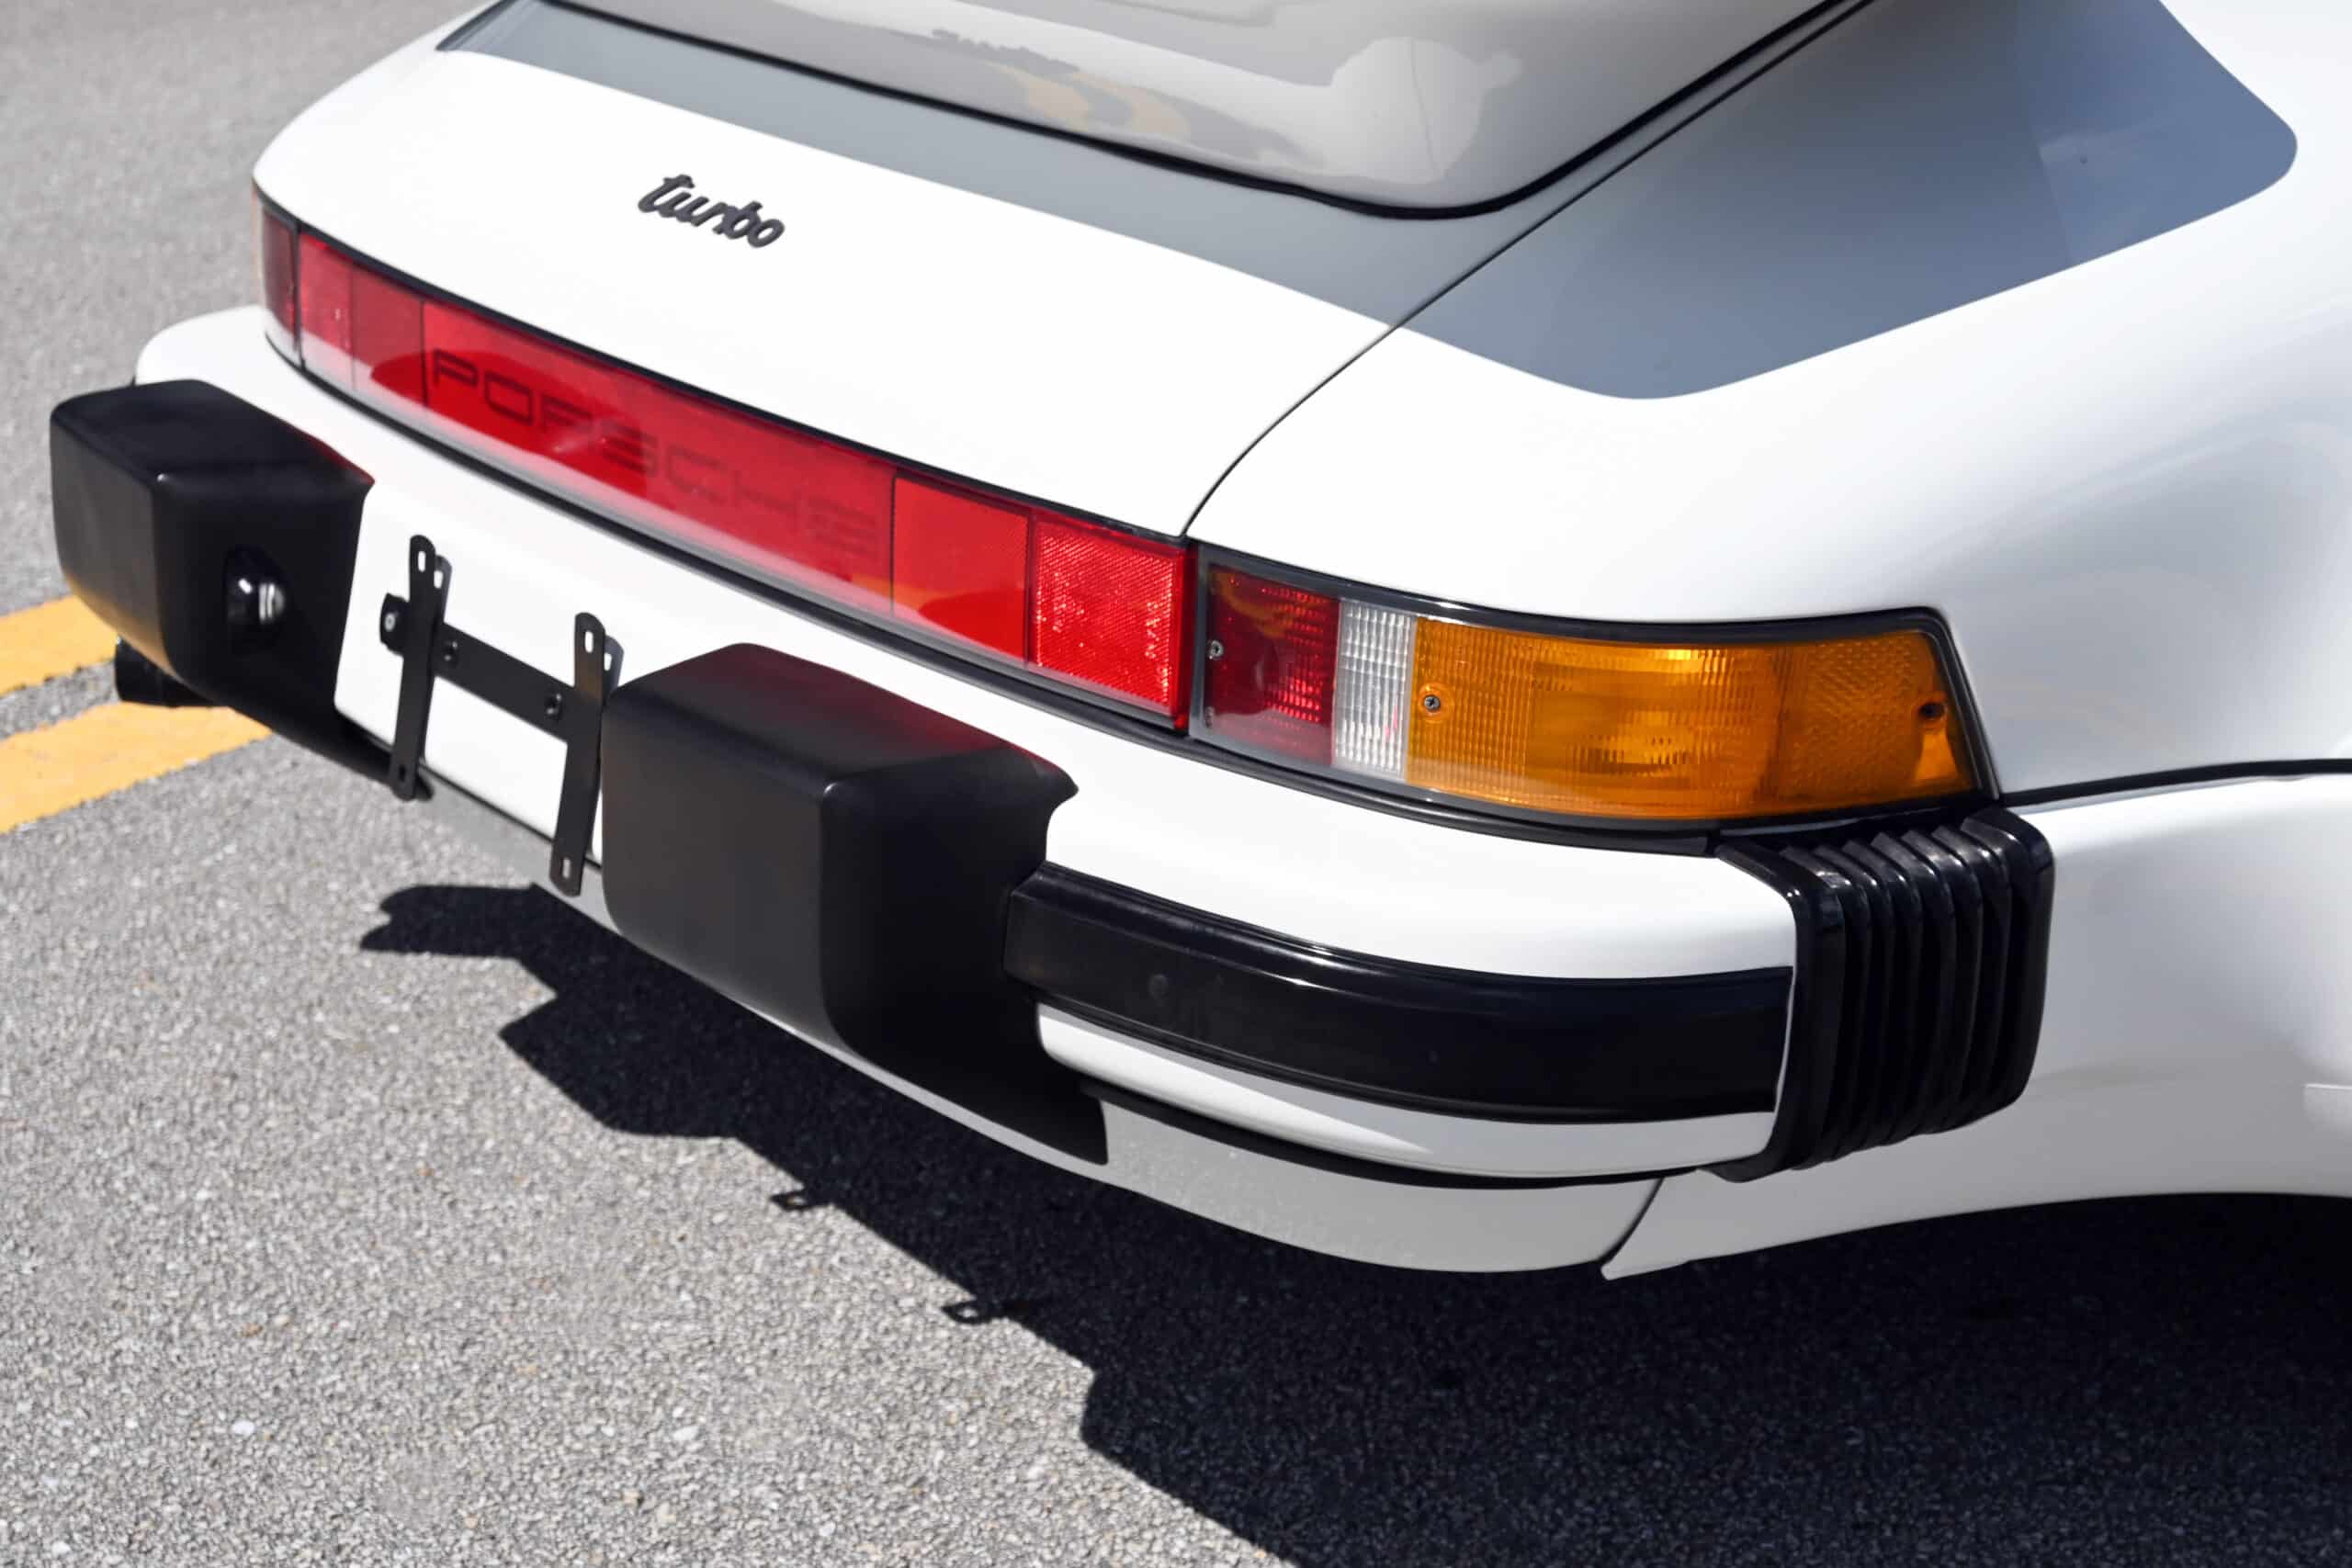 1987 Porsche 911 (930) Turbo, just 40K documented miles since new, Original paint, California car, CoA